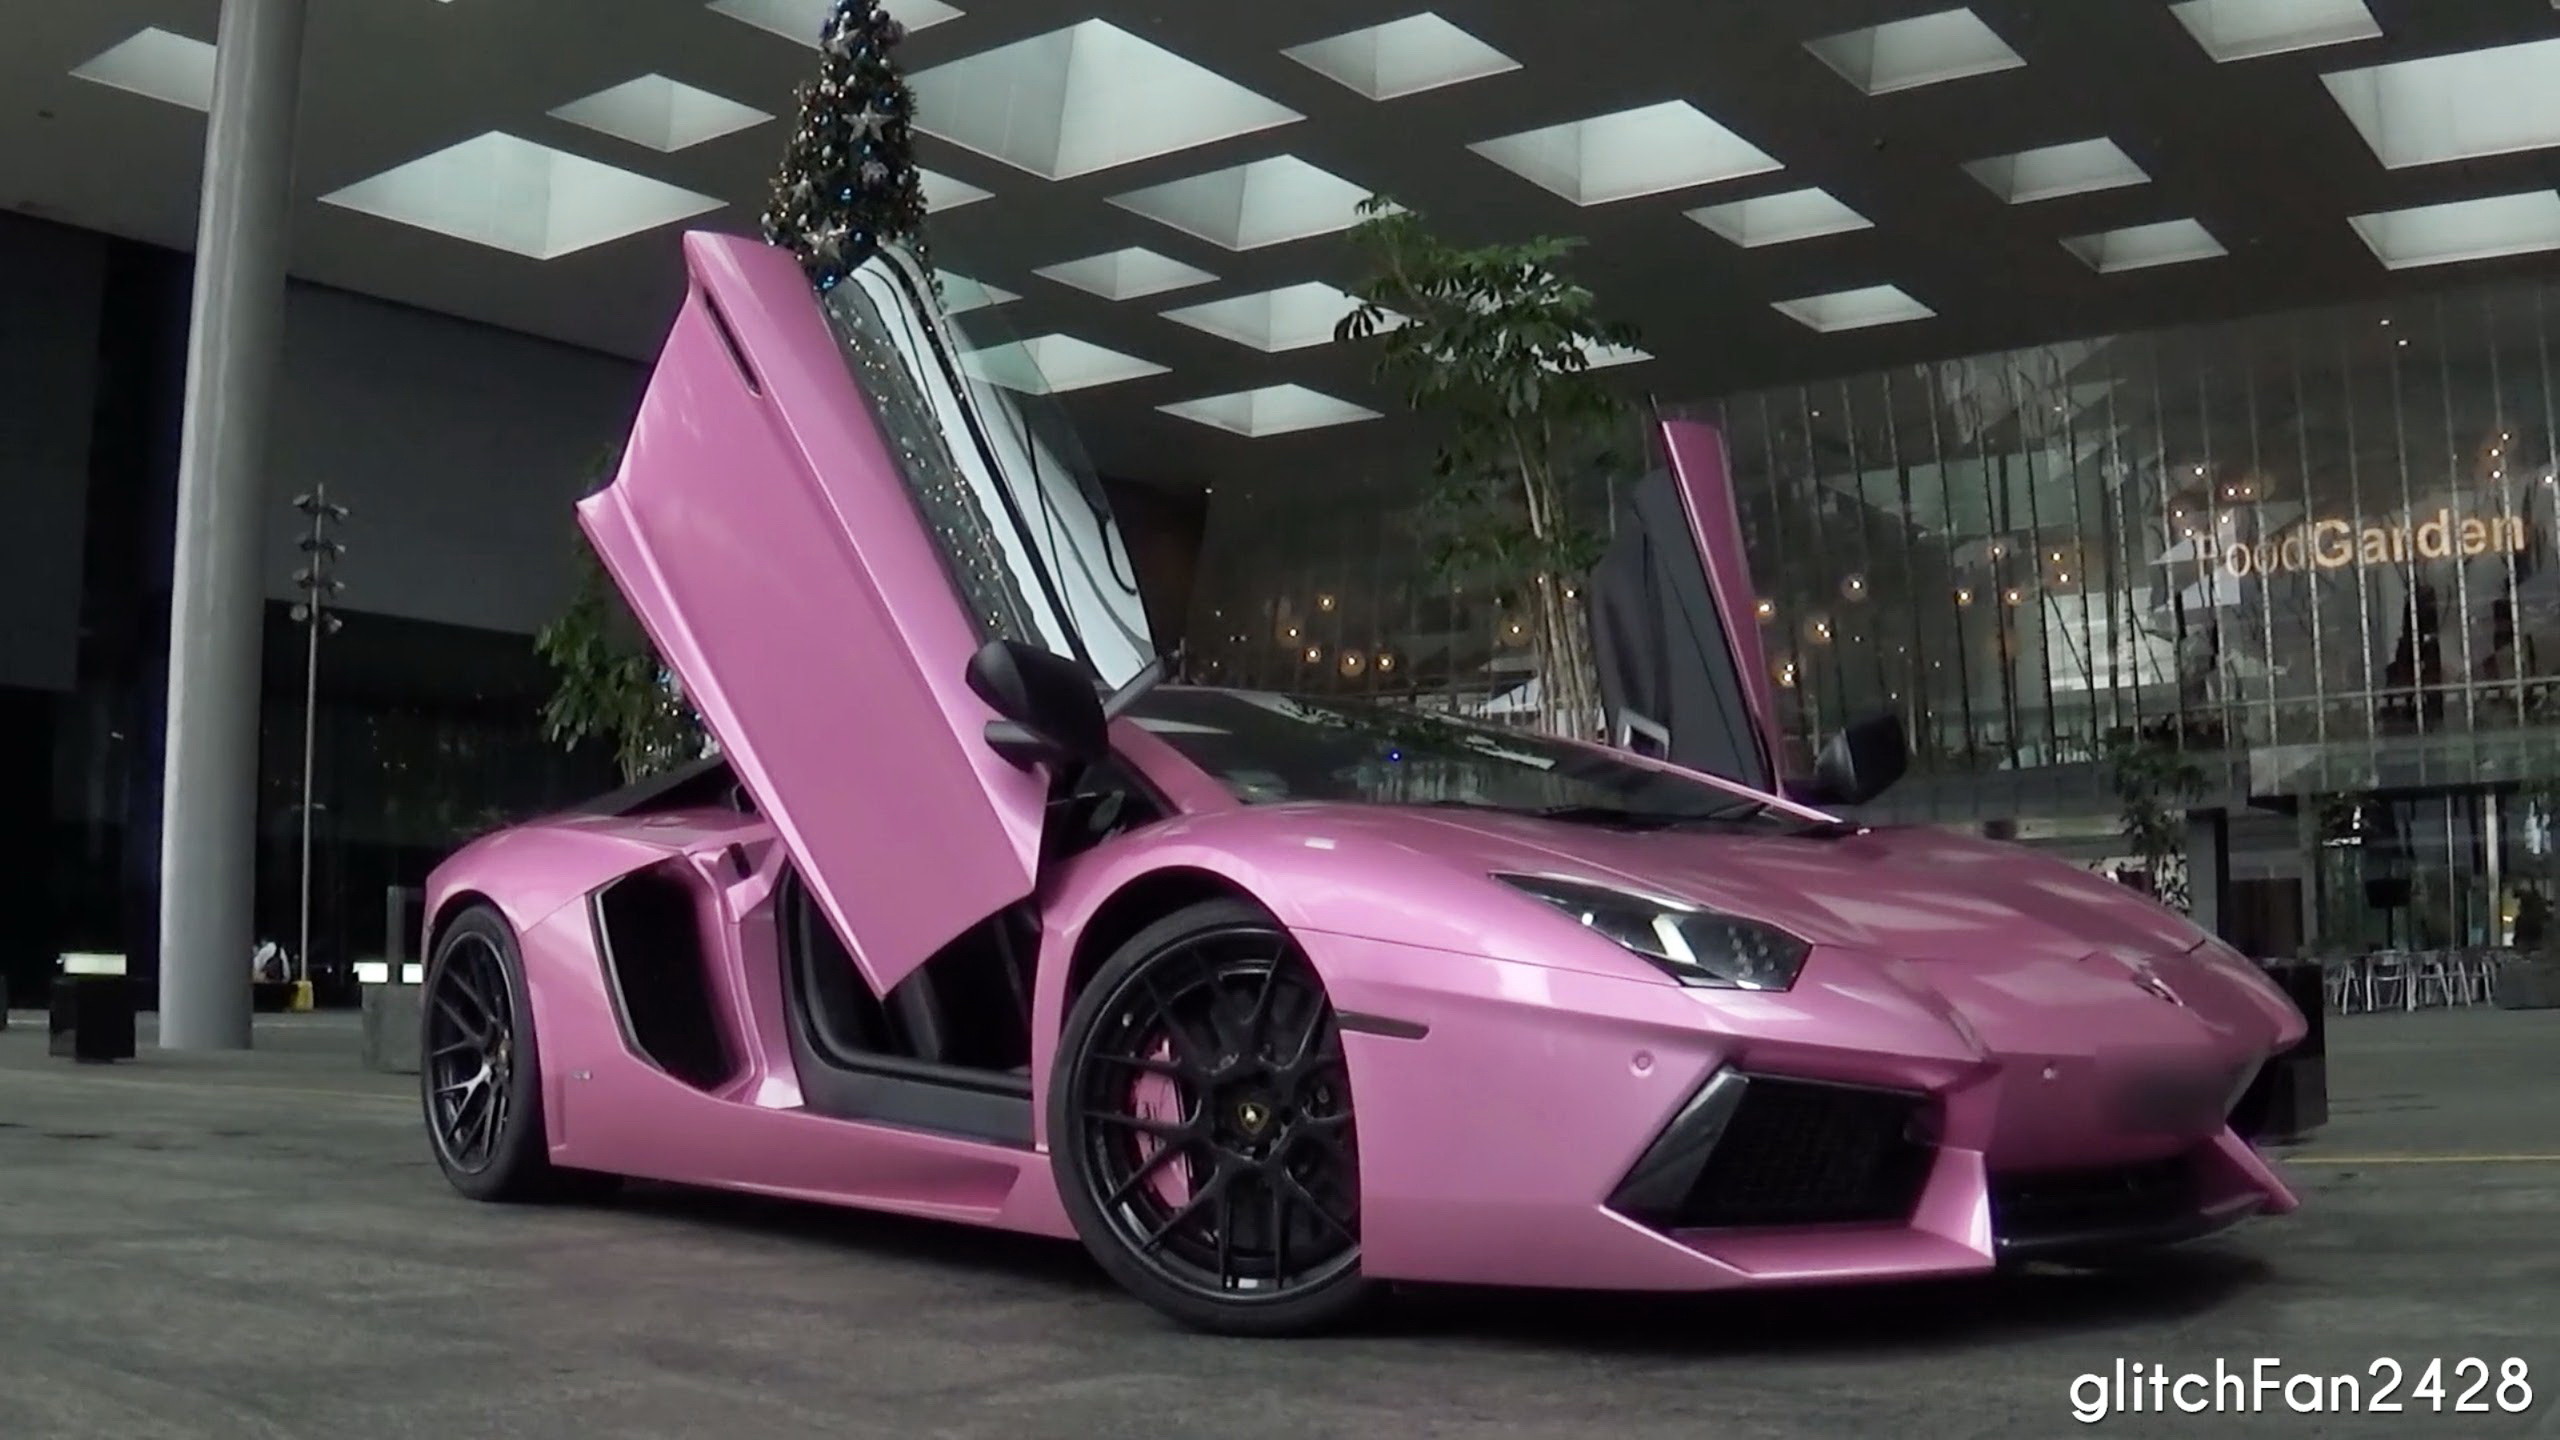 2560x1440 Pink Lamborghini Aventador Wallpaper Hd Background Wallpaper